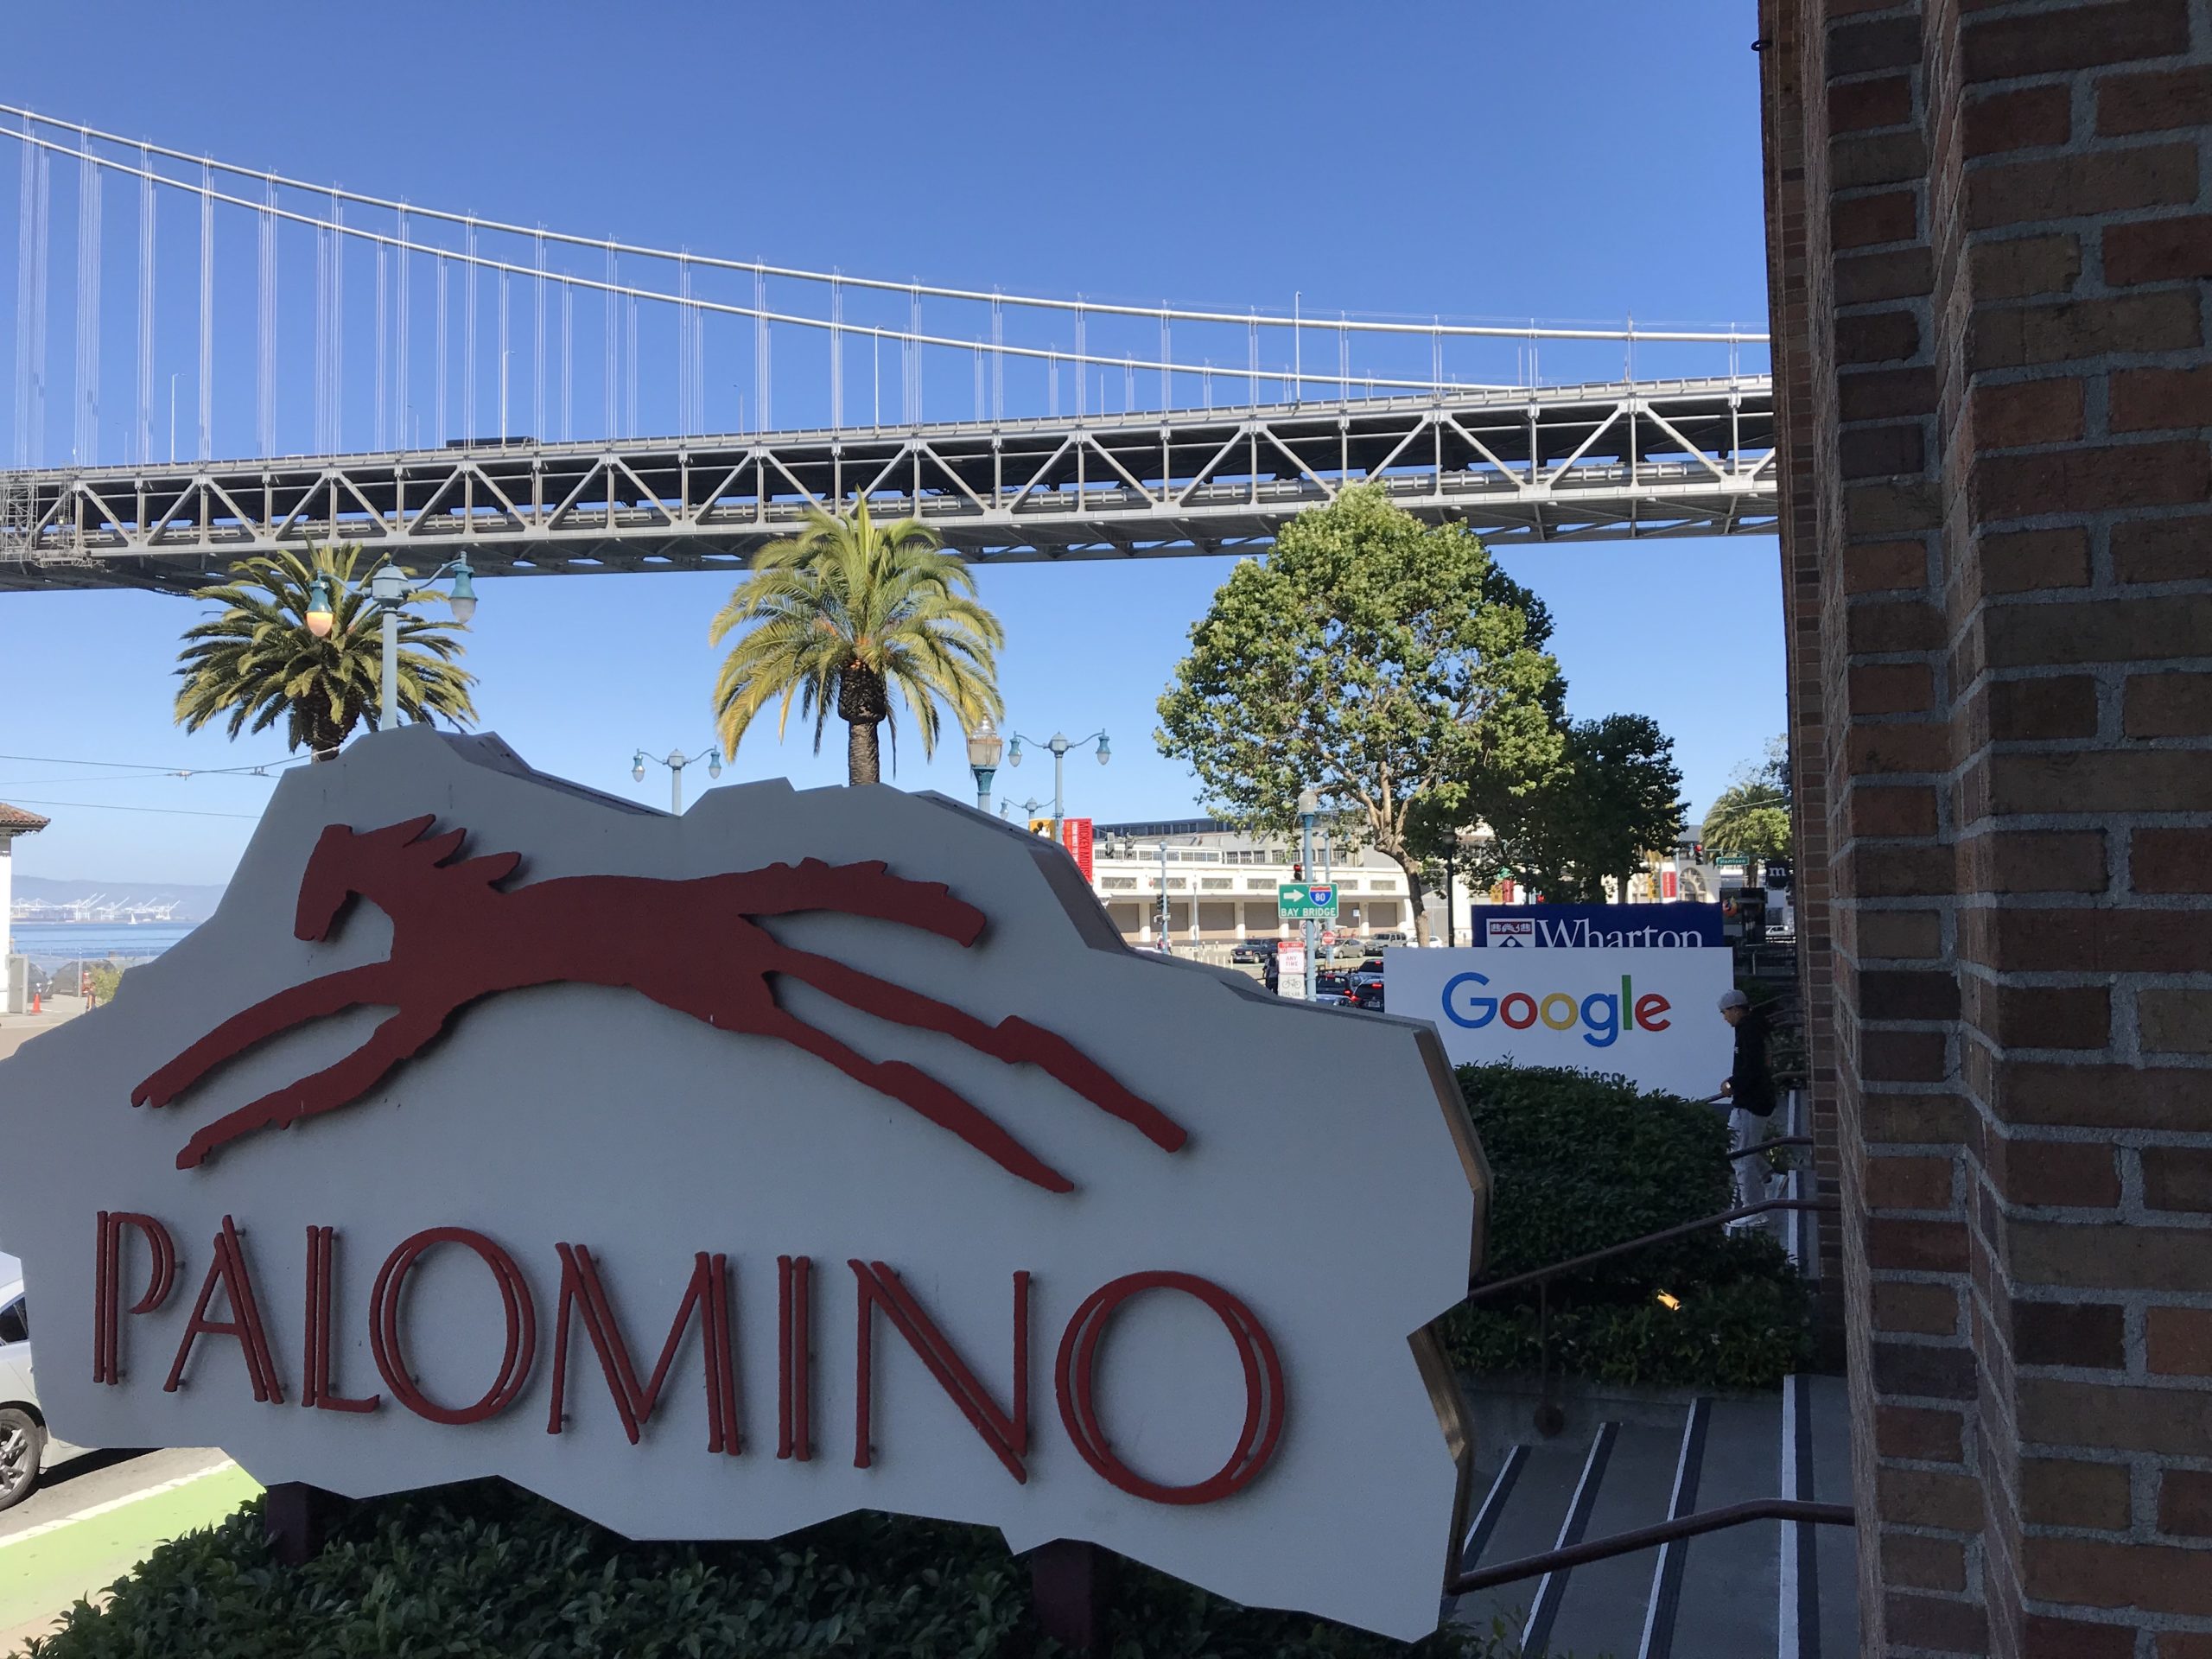 Palomino, Google, Baybridge